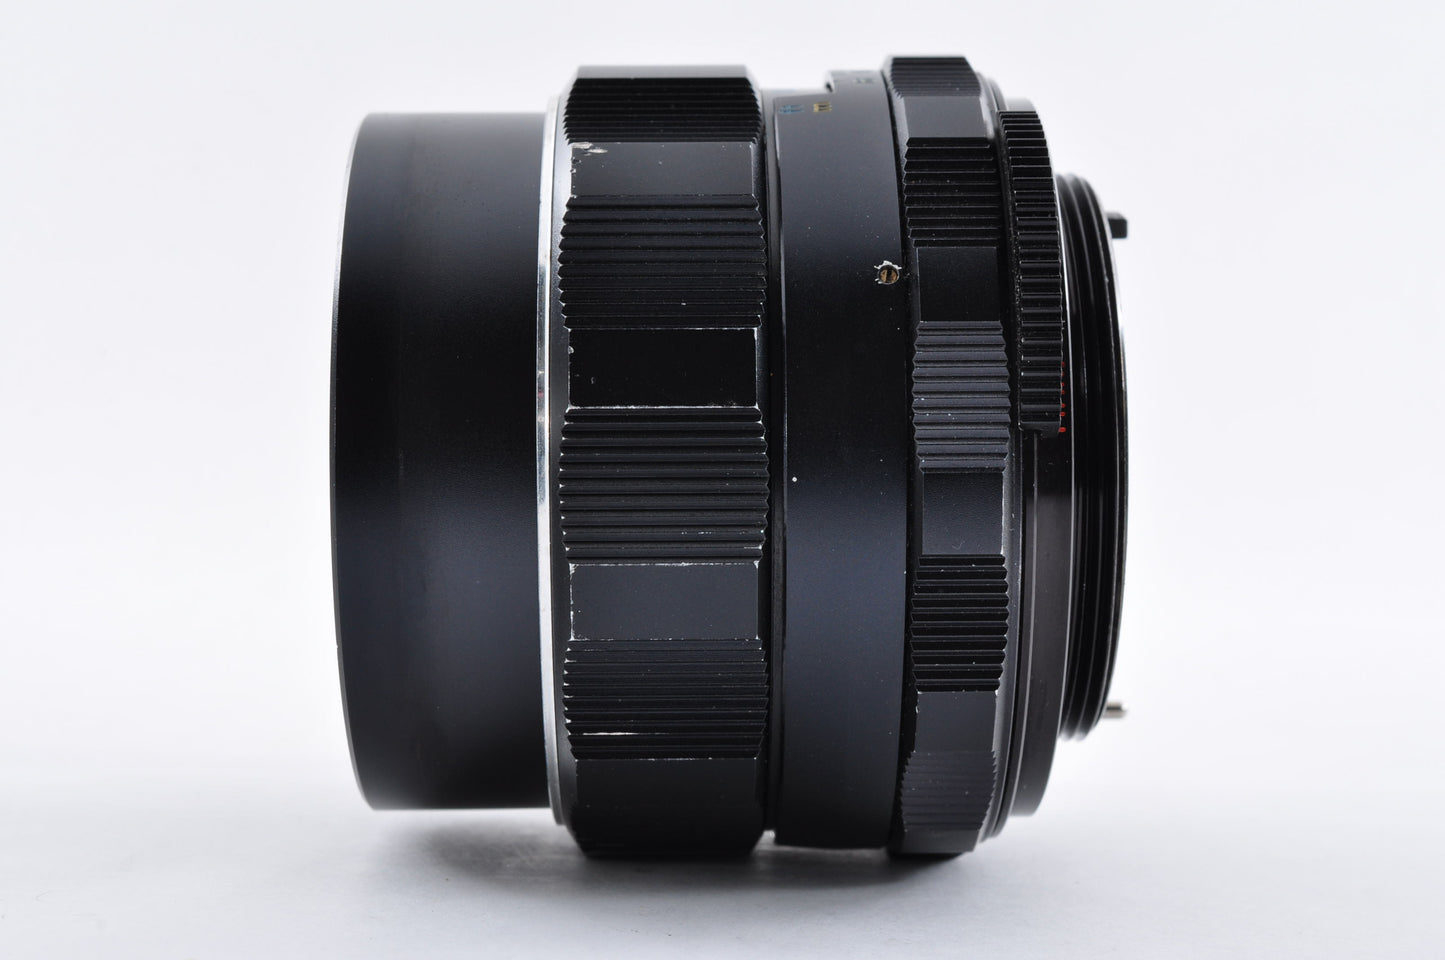 Pentax Spotmatic SP Black 35mm Film Camera Super-Multi-Coated Takumar 55mm f/1.8 tested From Japan #411856